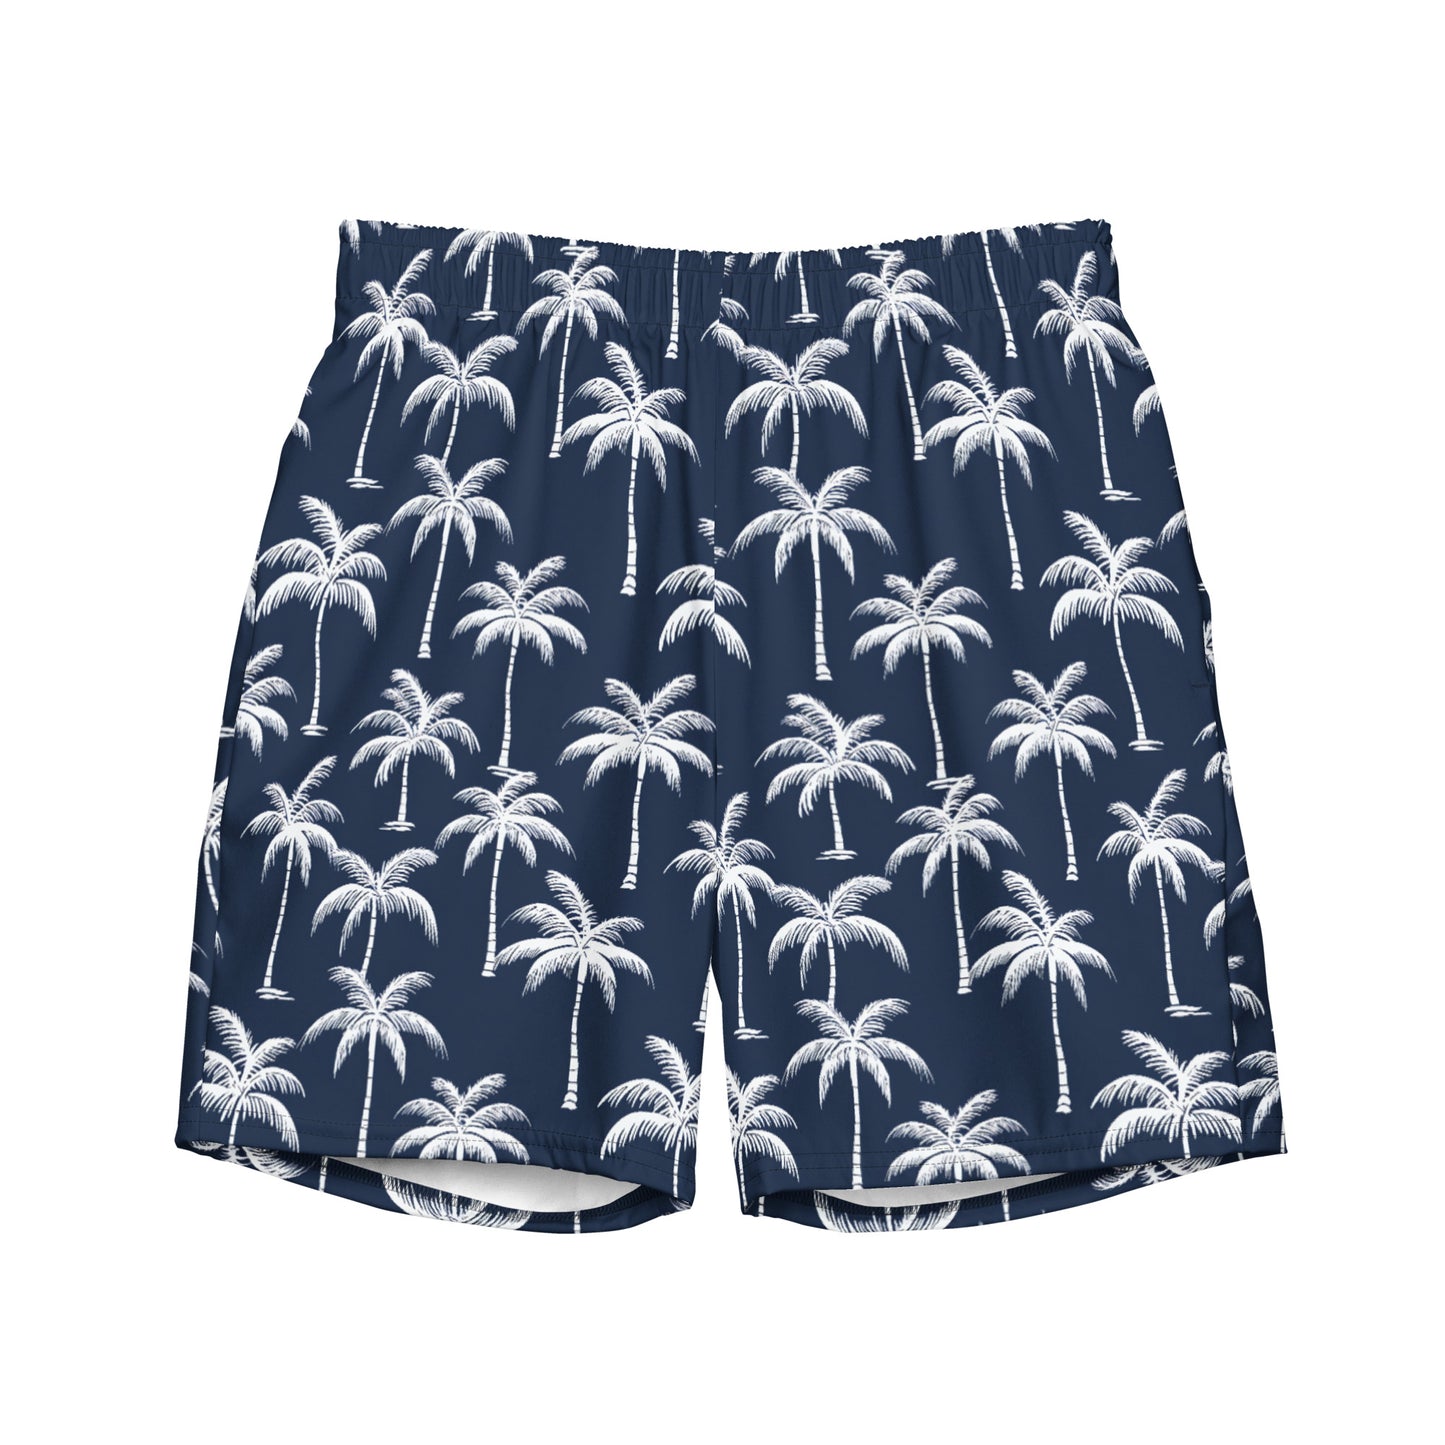 Navy Palm Print Men's Swim Trunks